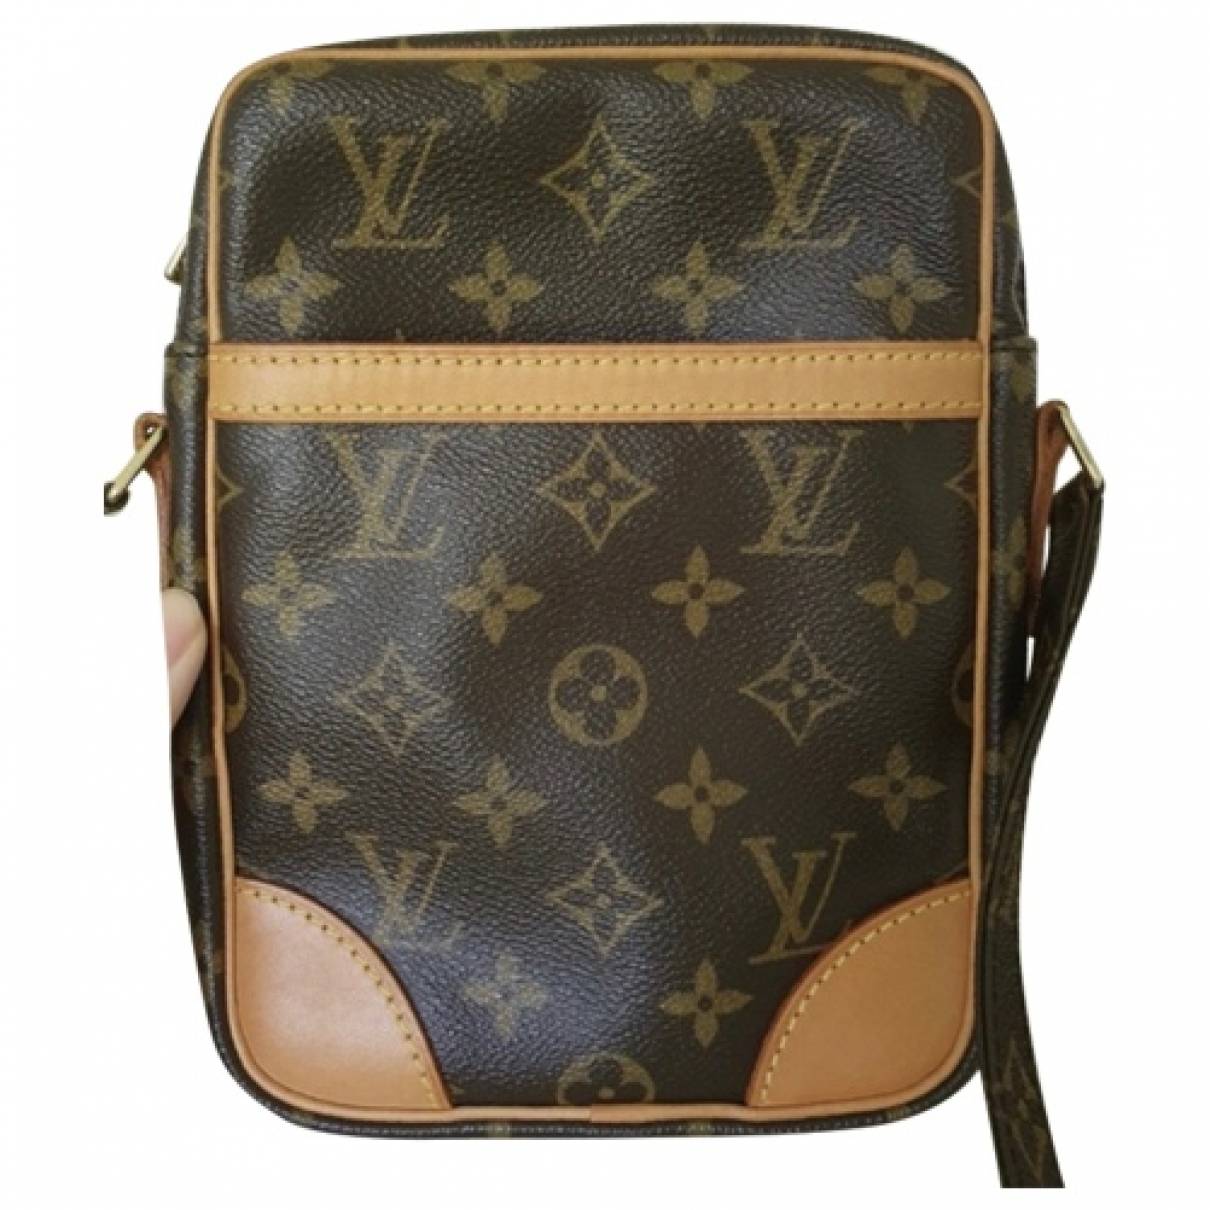 Louis Vuitton Utility Bag